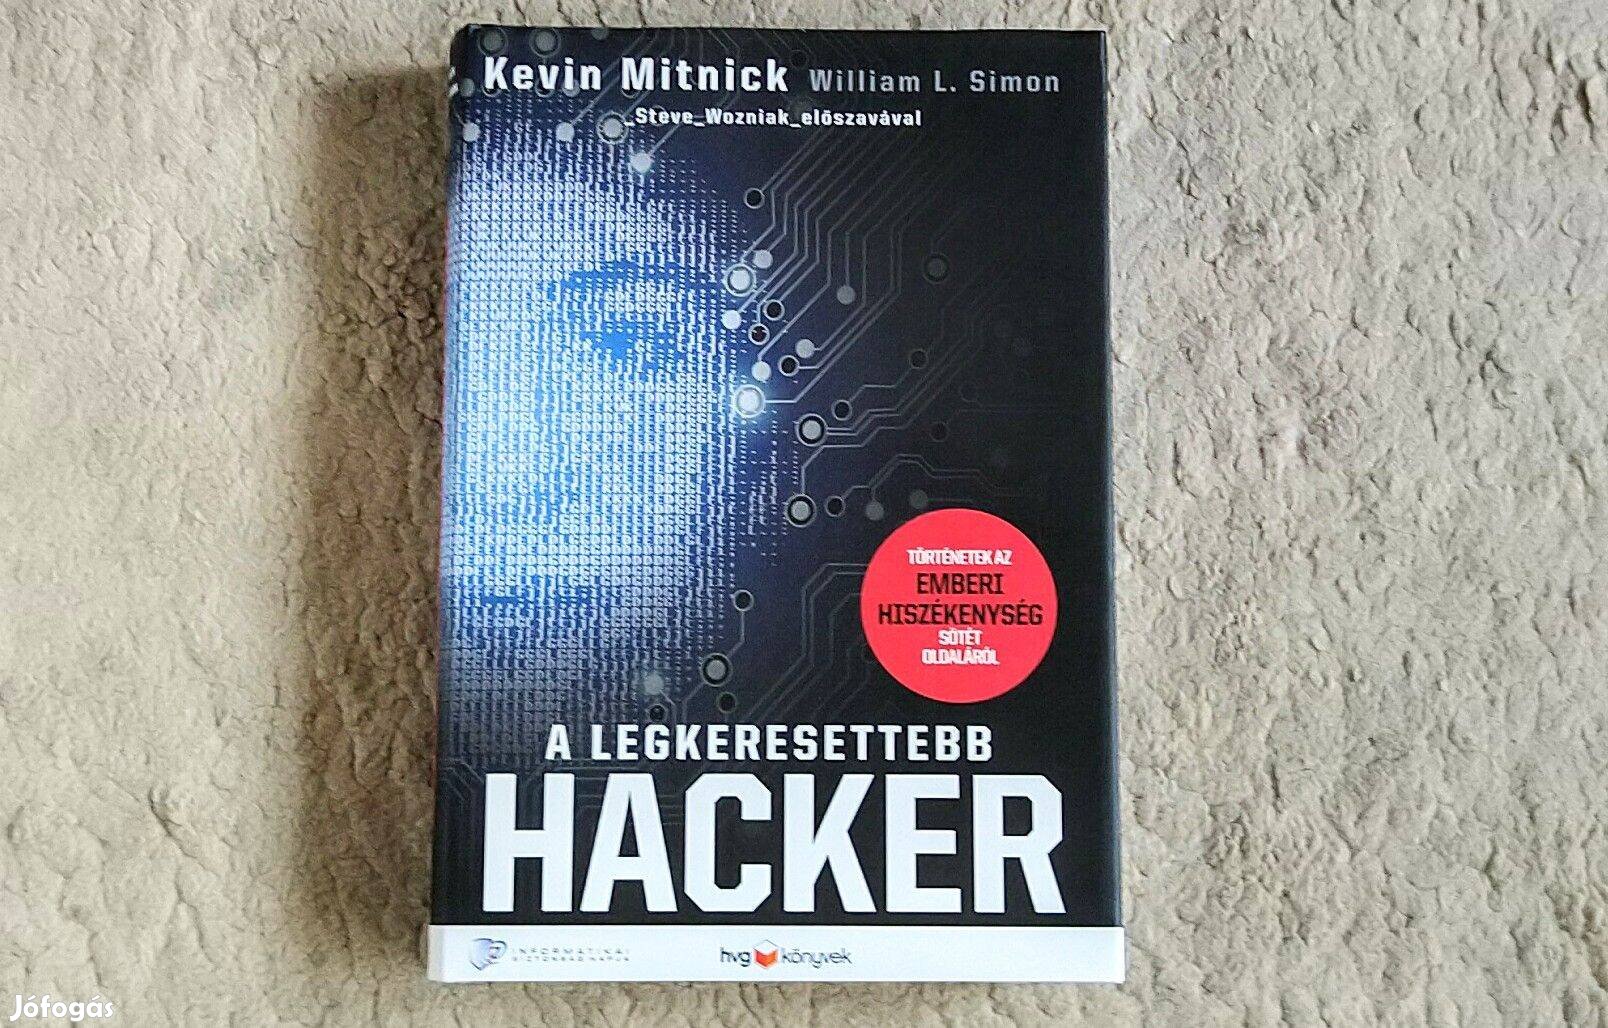 A legkeresettebb hacker - Kevin Mitnick, William L. Simon